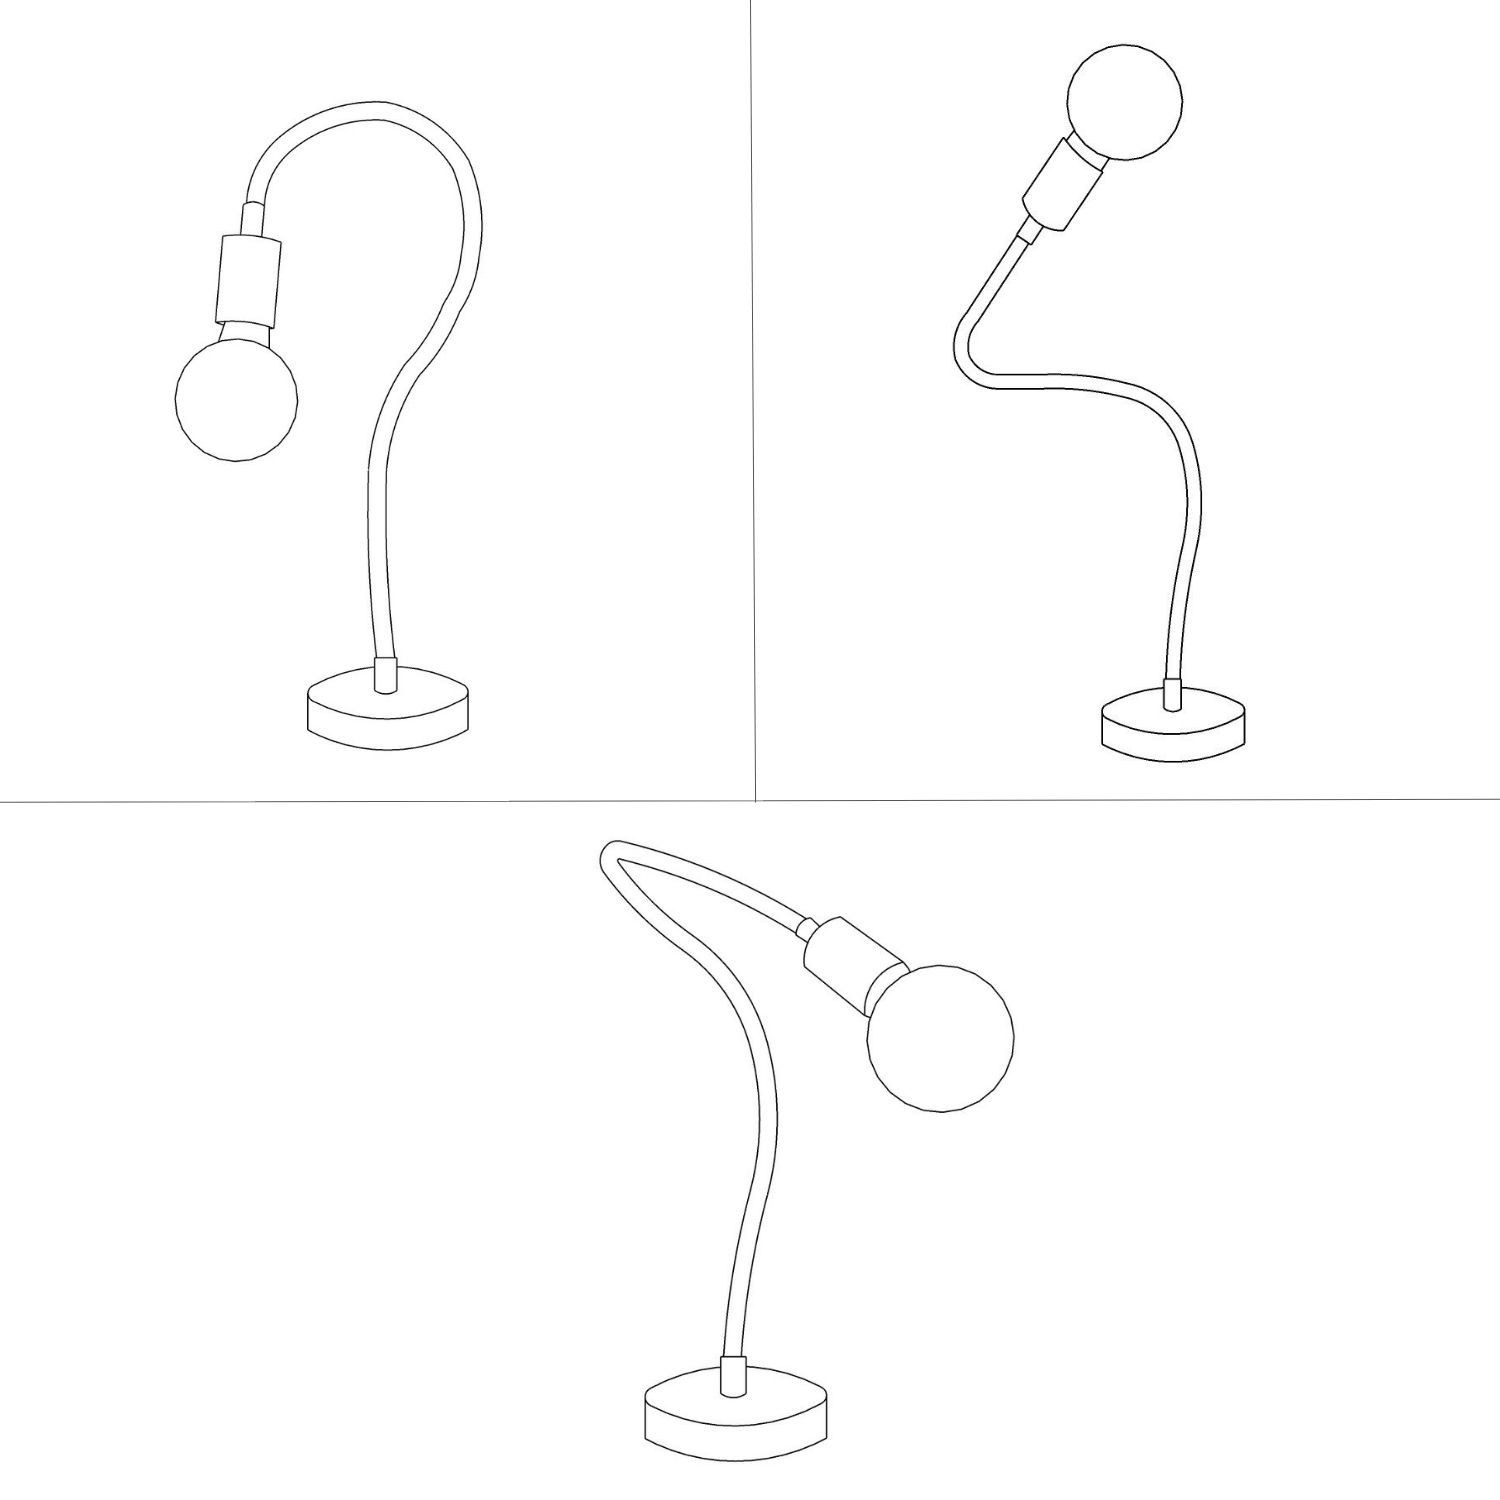 Flex flexible table lamp providing diffused light